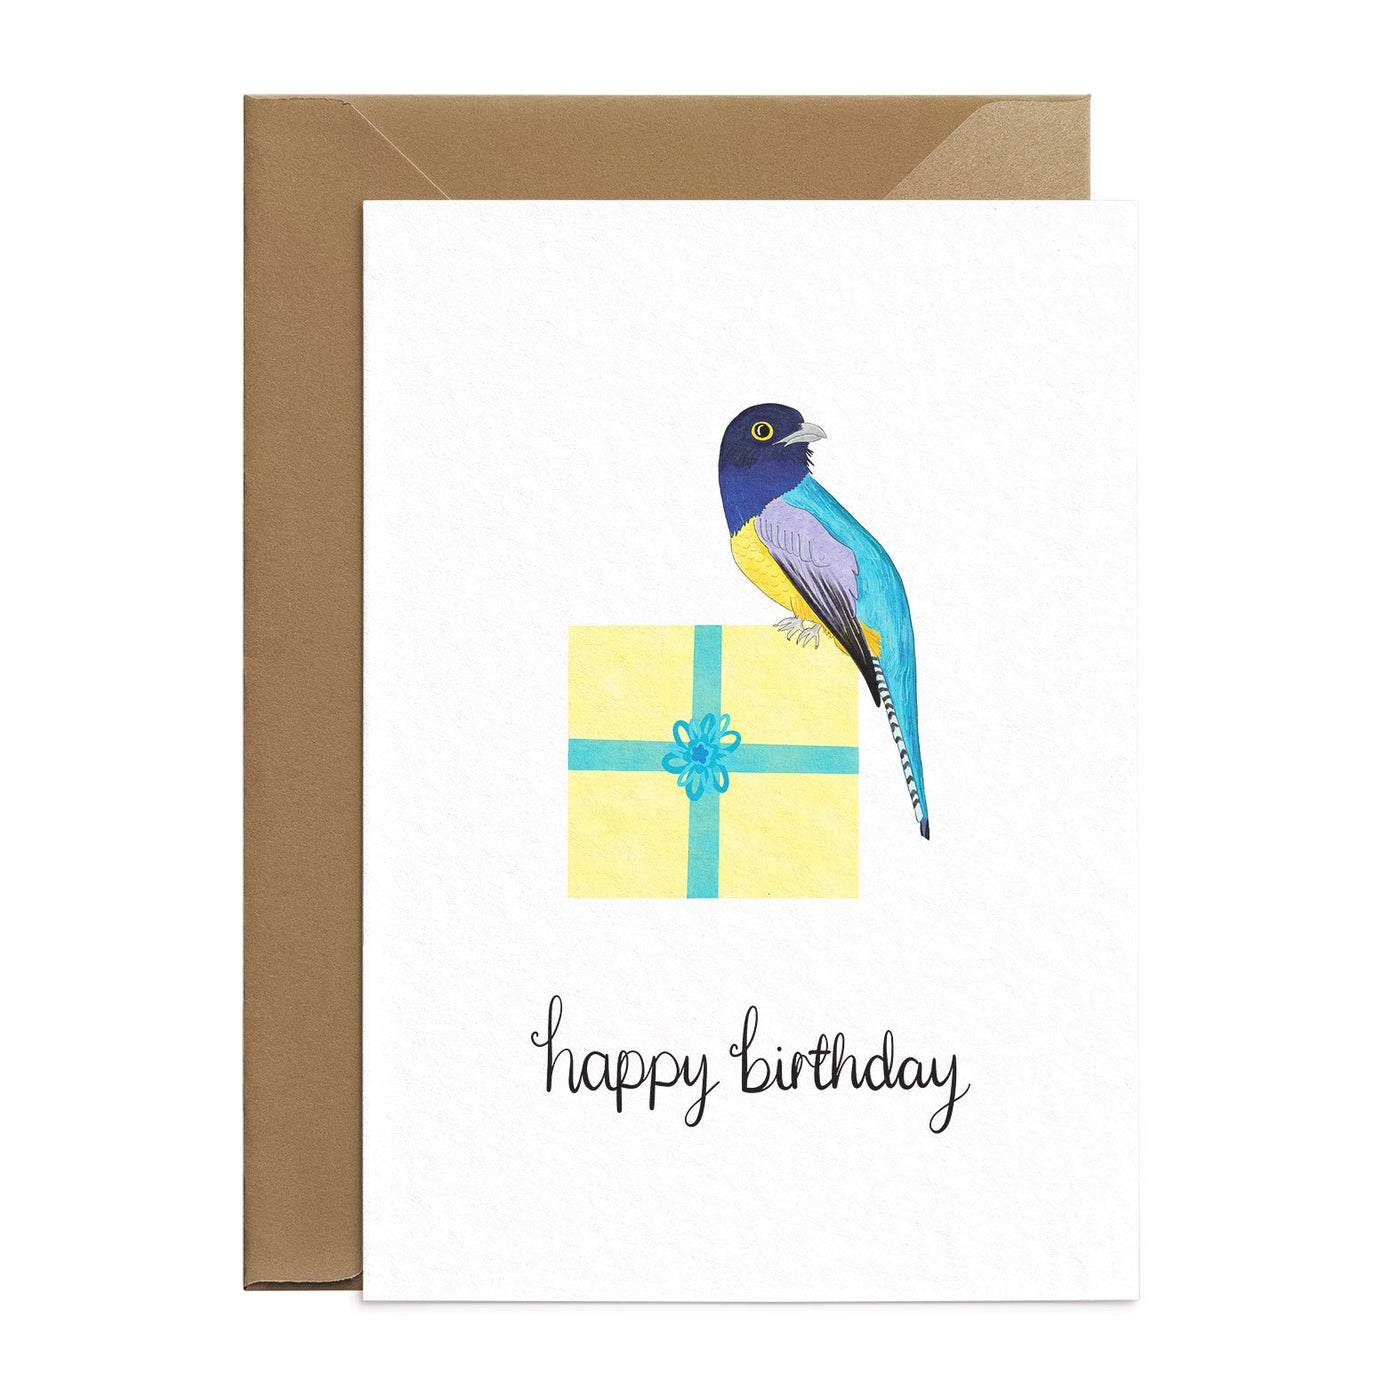 Guianan Trogon Birthday Card - Poppins & Co.